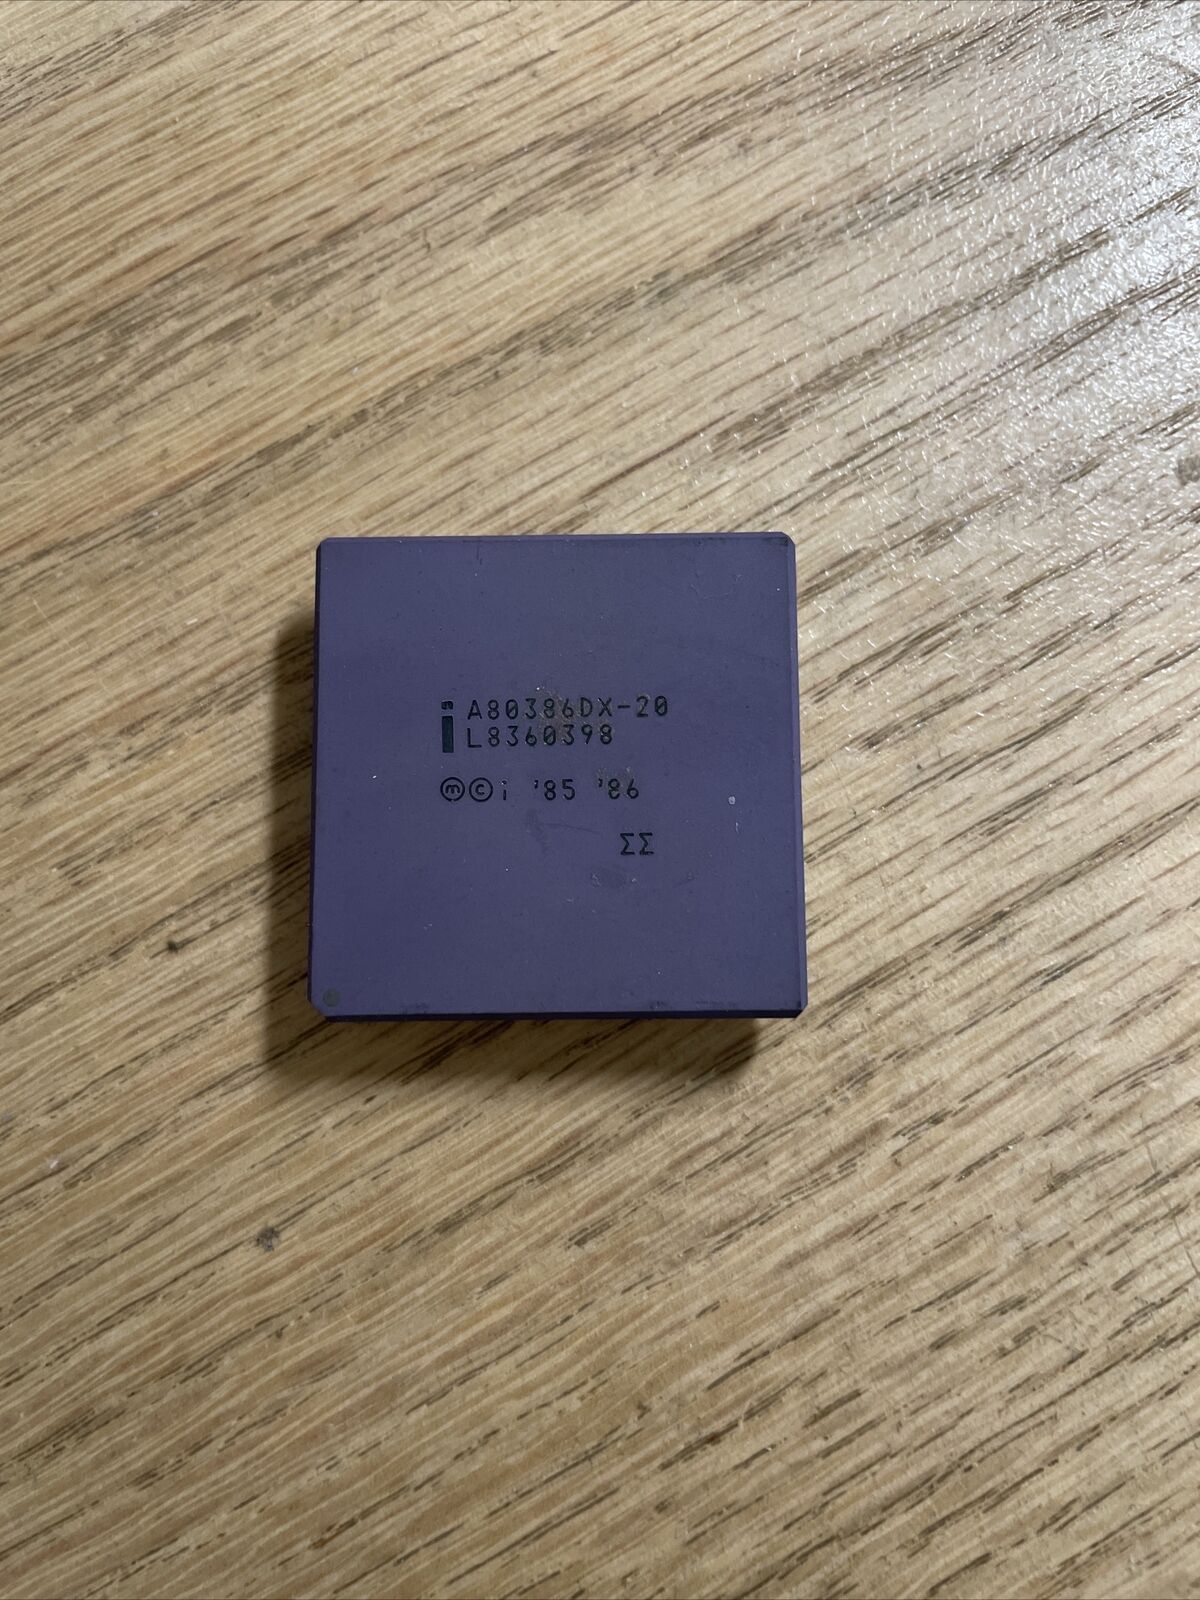 Intel A80386DX-20, ΣΣ Double sigma i386, rare vintage CPU, GOLD 85 86